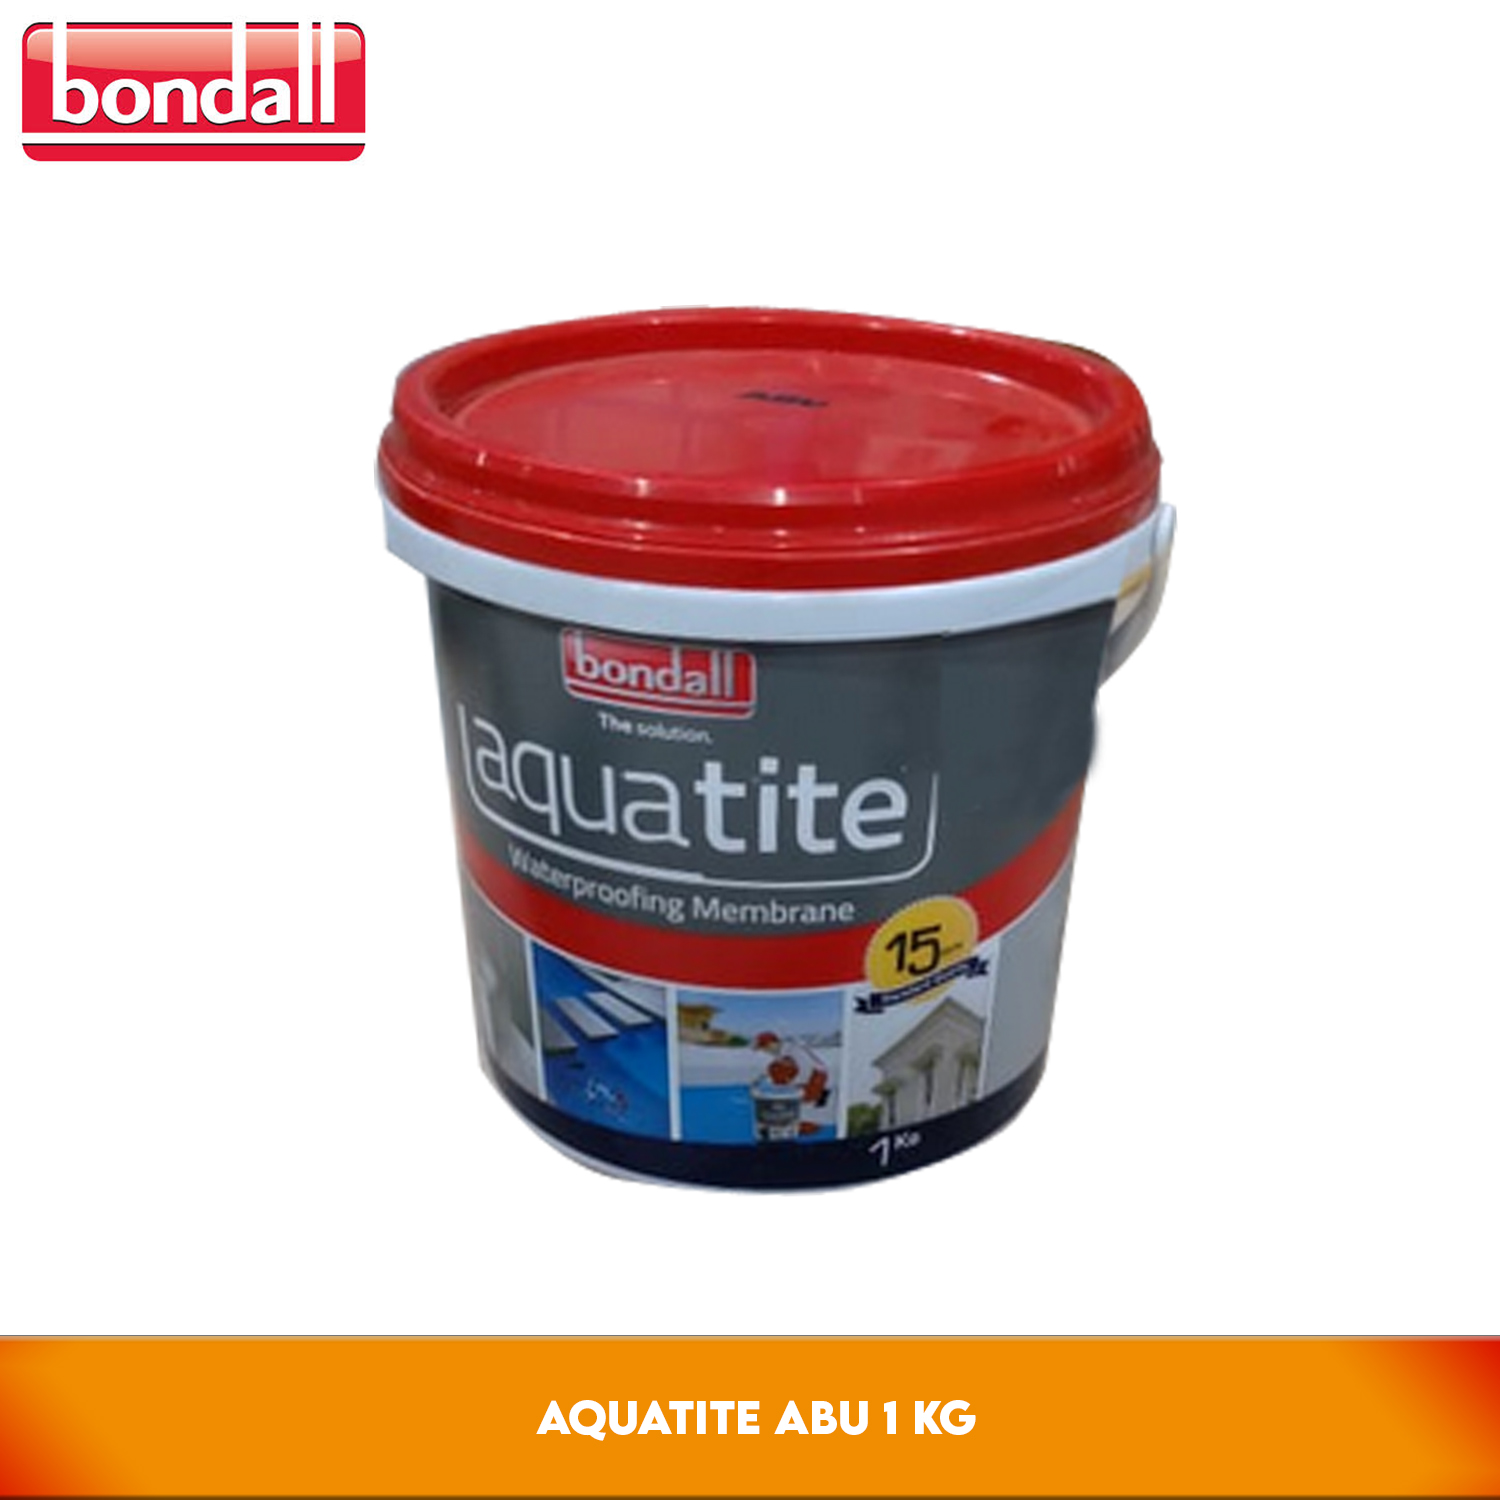 Bondall Aquatite Cat Pelapis Anti Bocor - Grey 1 Kg